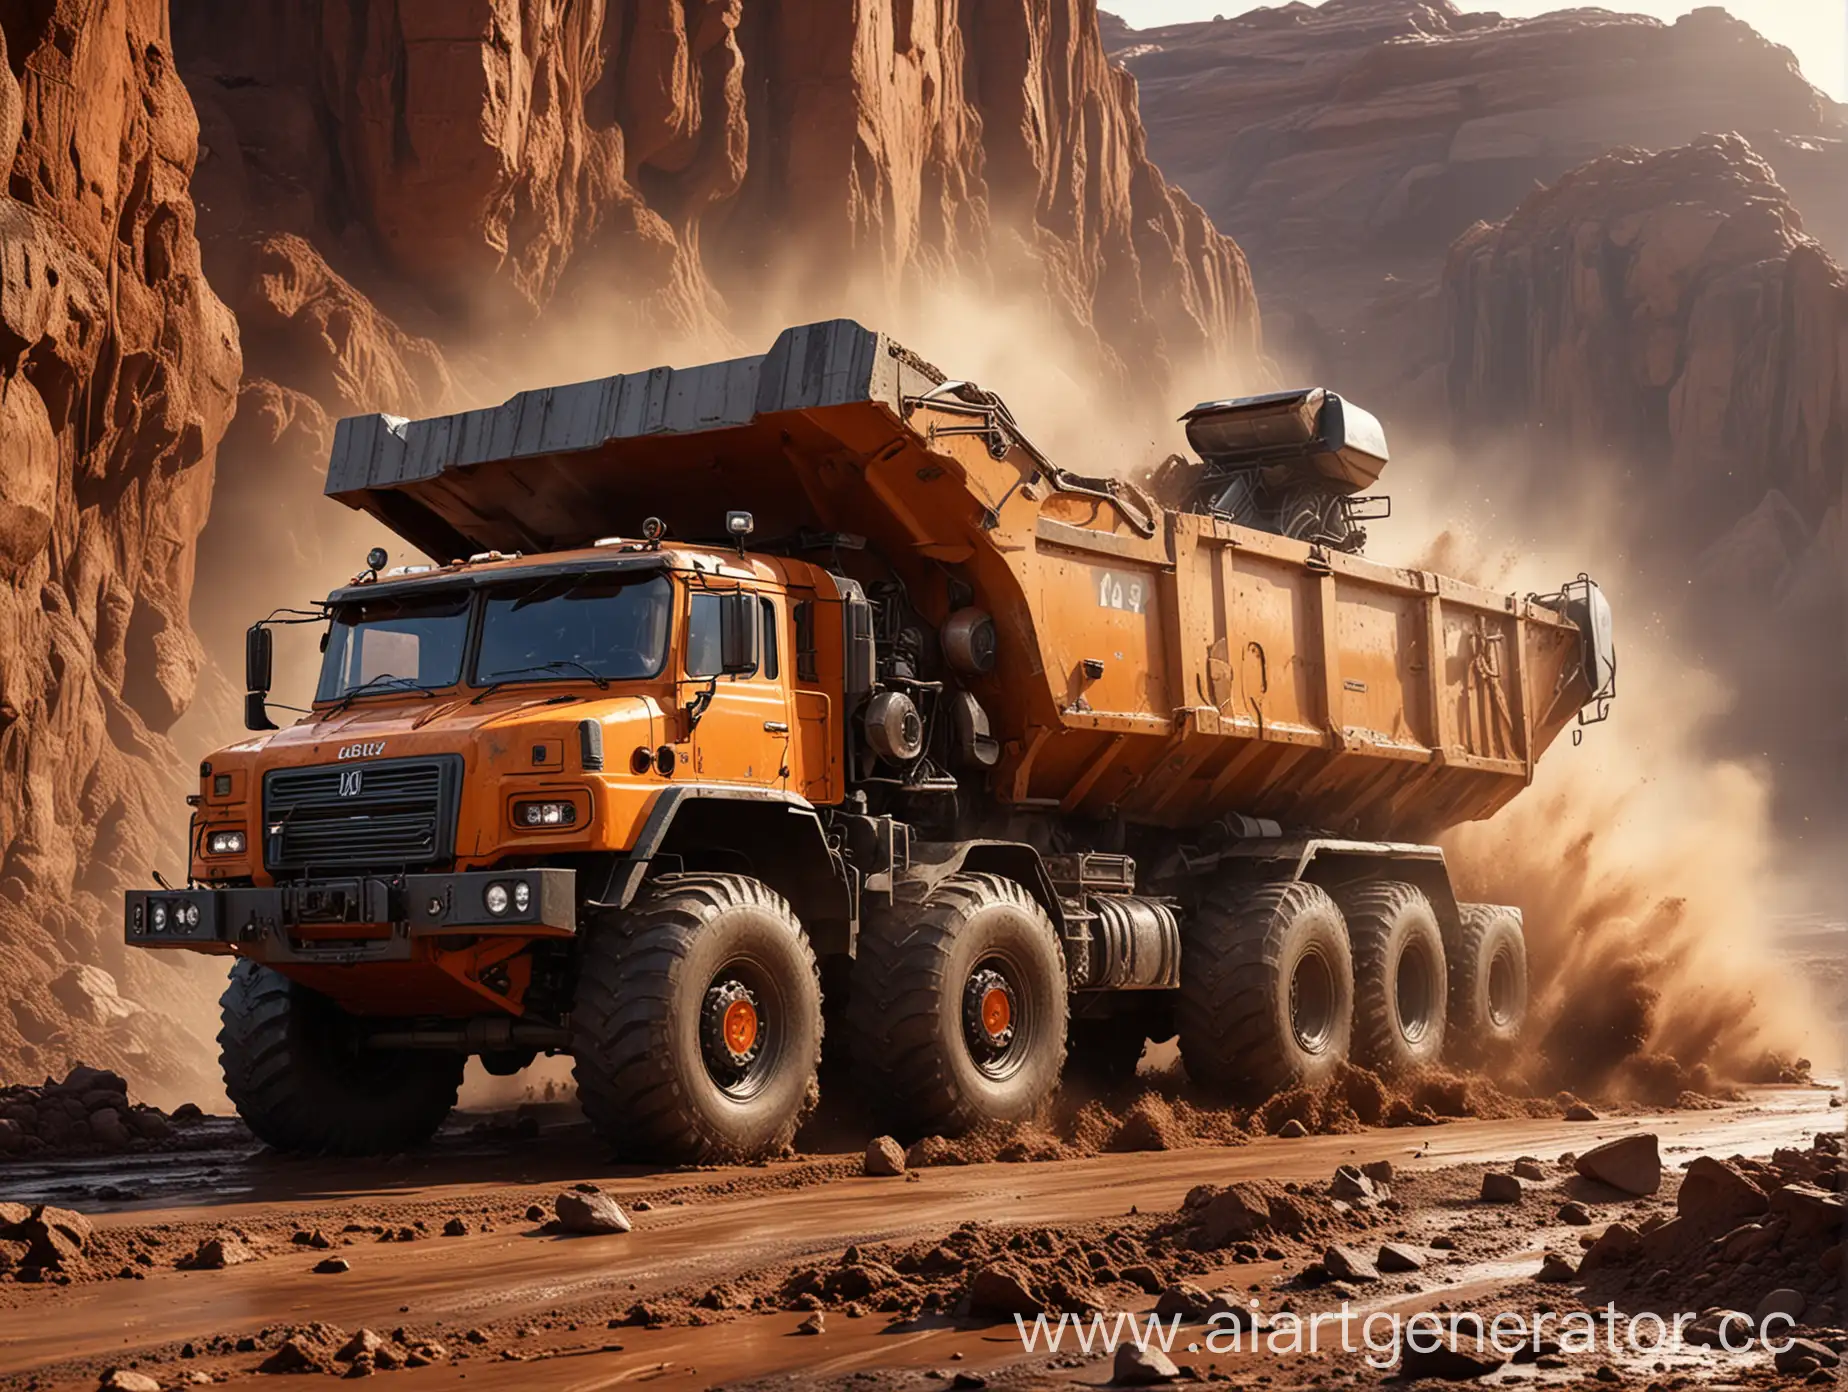 Futuristic-FourAxle-MAz-Dump-Truck-Navigating-Martian-Terrain-in-HighResolution-Professional-Photo